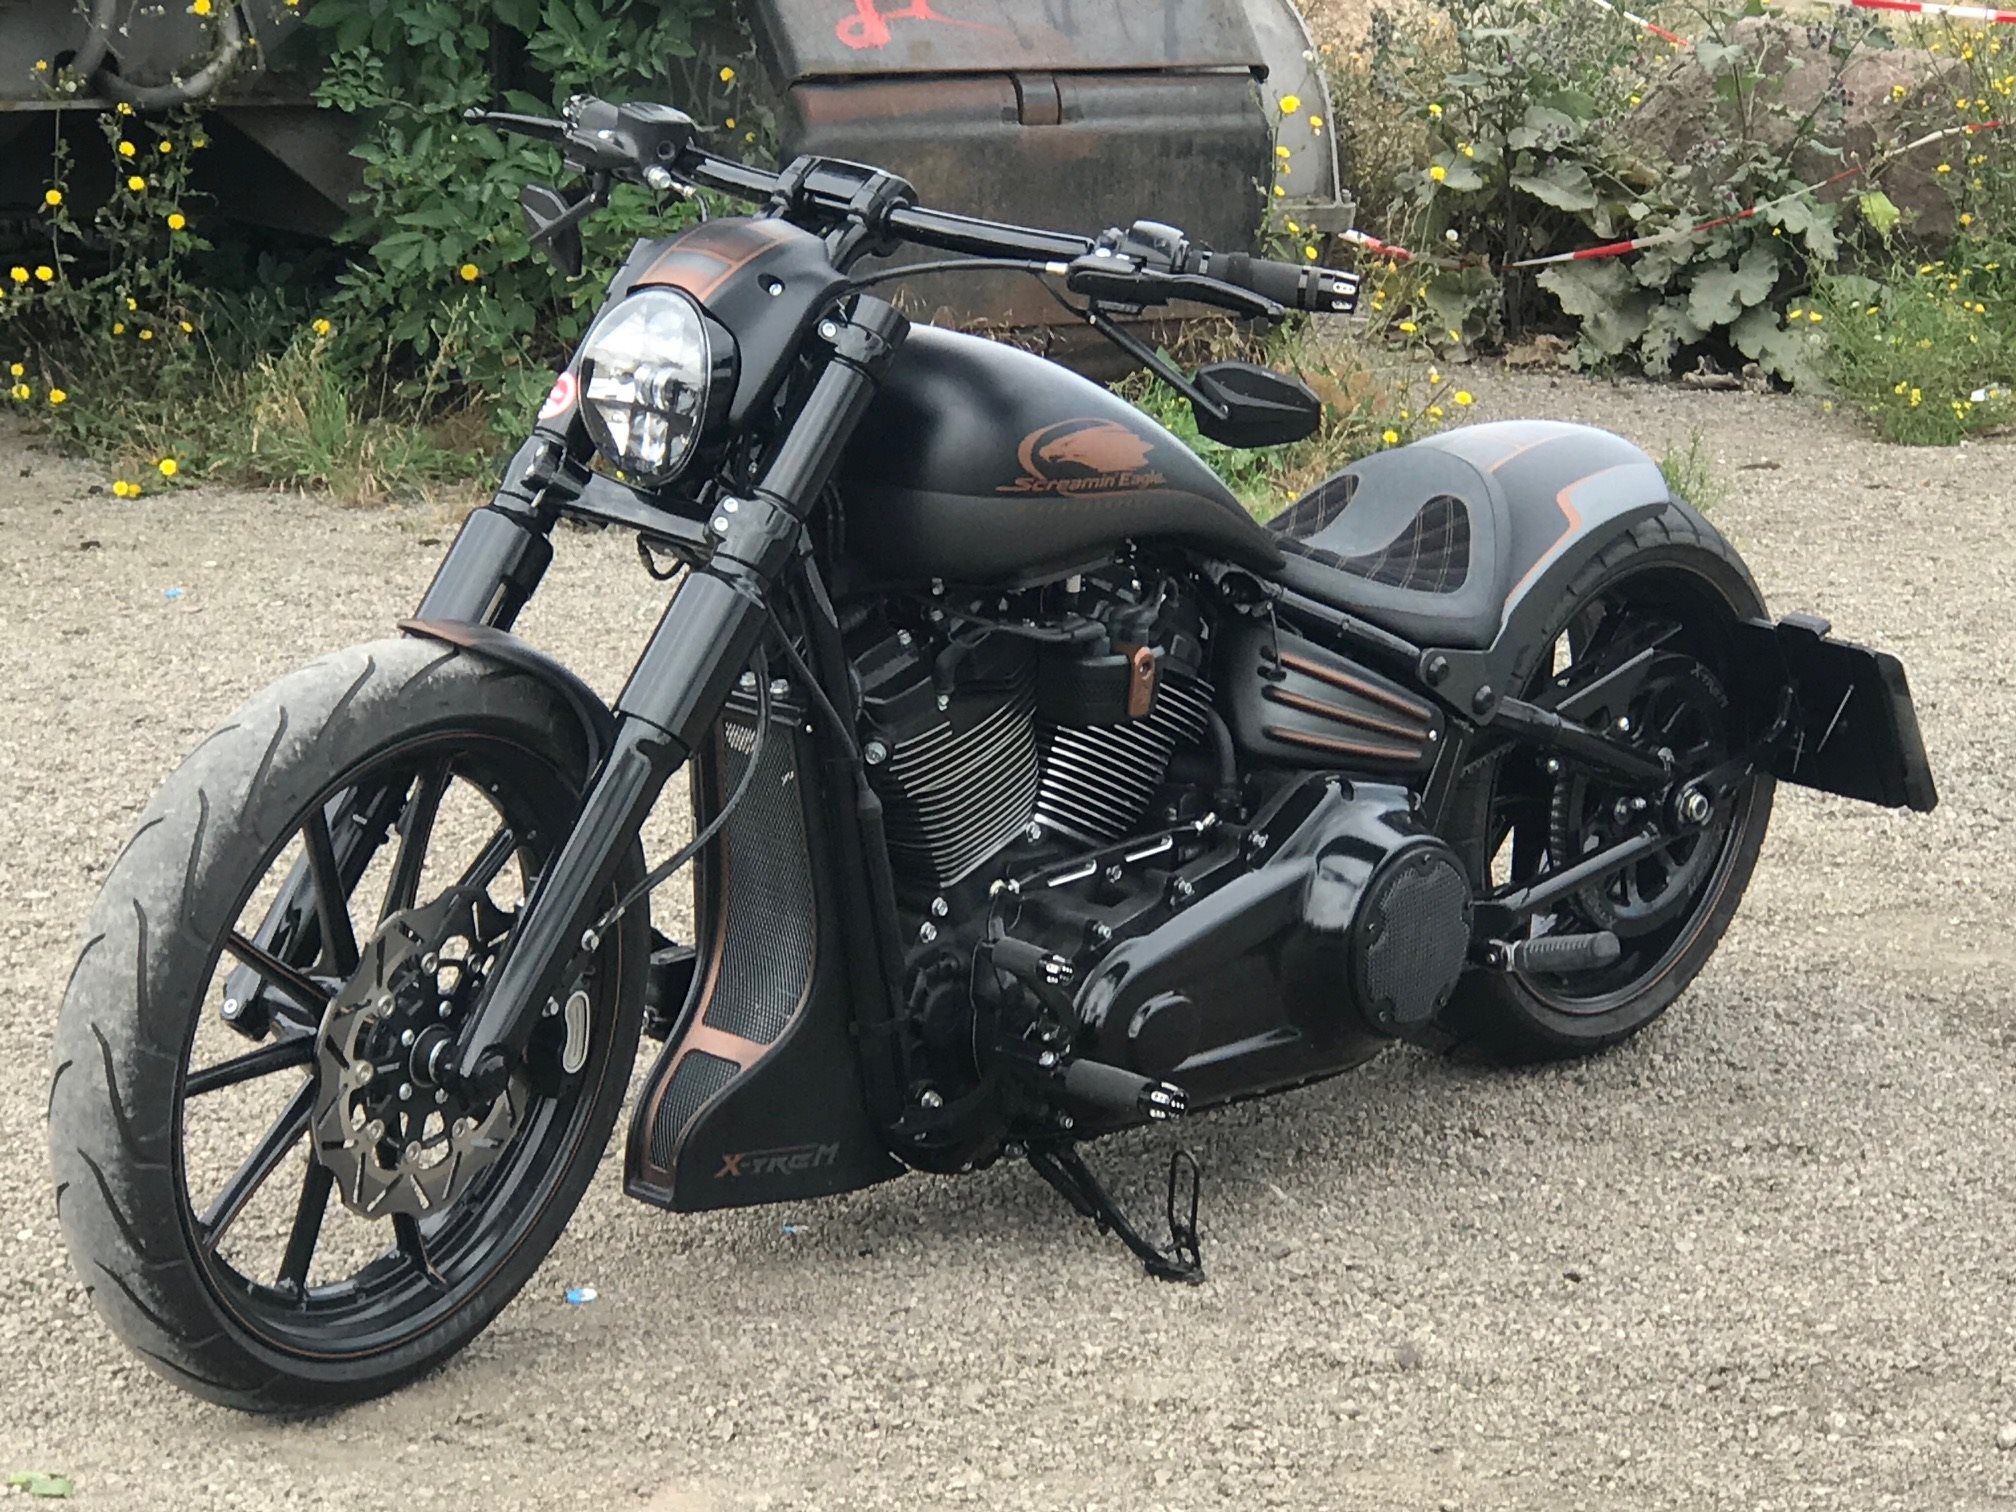 Umgebautes Motorrad Harley Davidson Softail Breakout 114 Fxbrs Von X Trem Custombikes 1000ps De